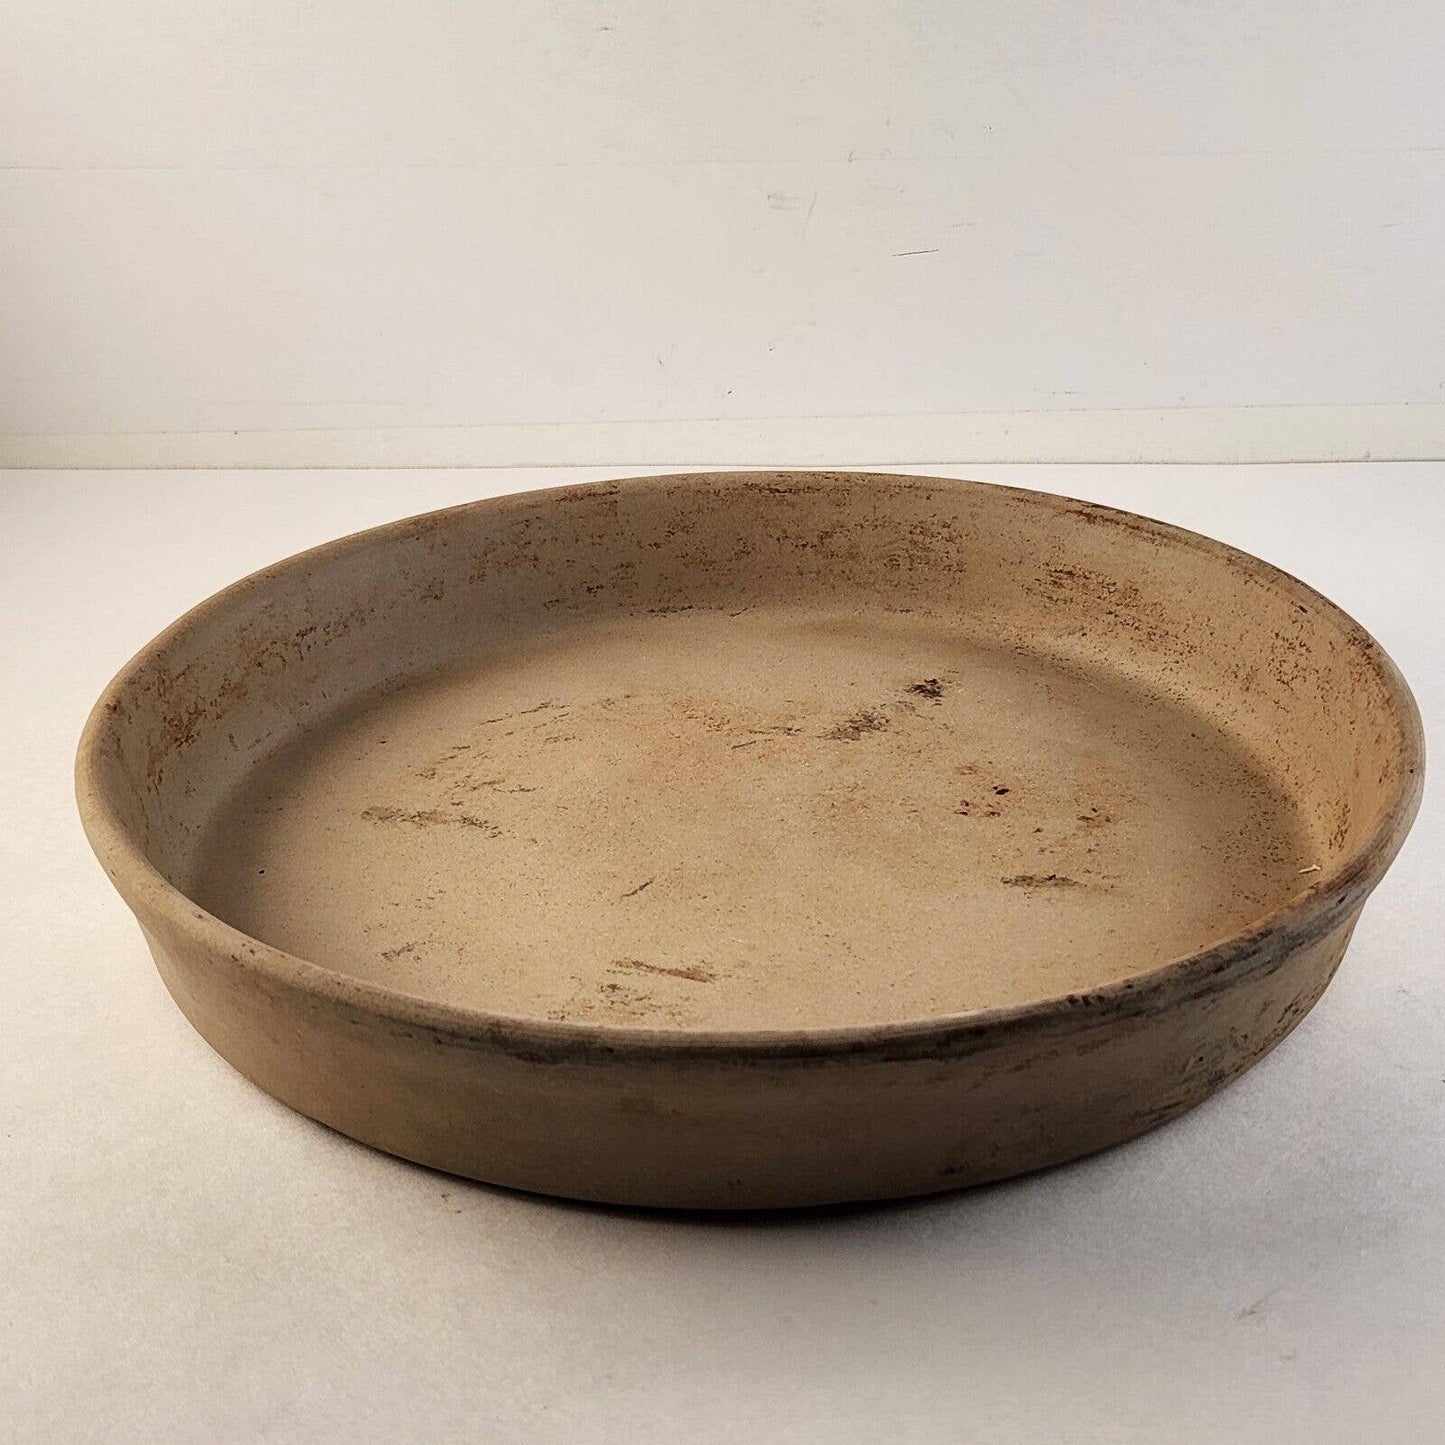 Pampered Chef Family Heritage Stoneware Baking Dish 9” x 14”